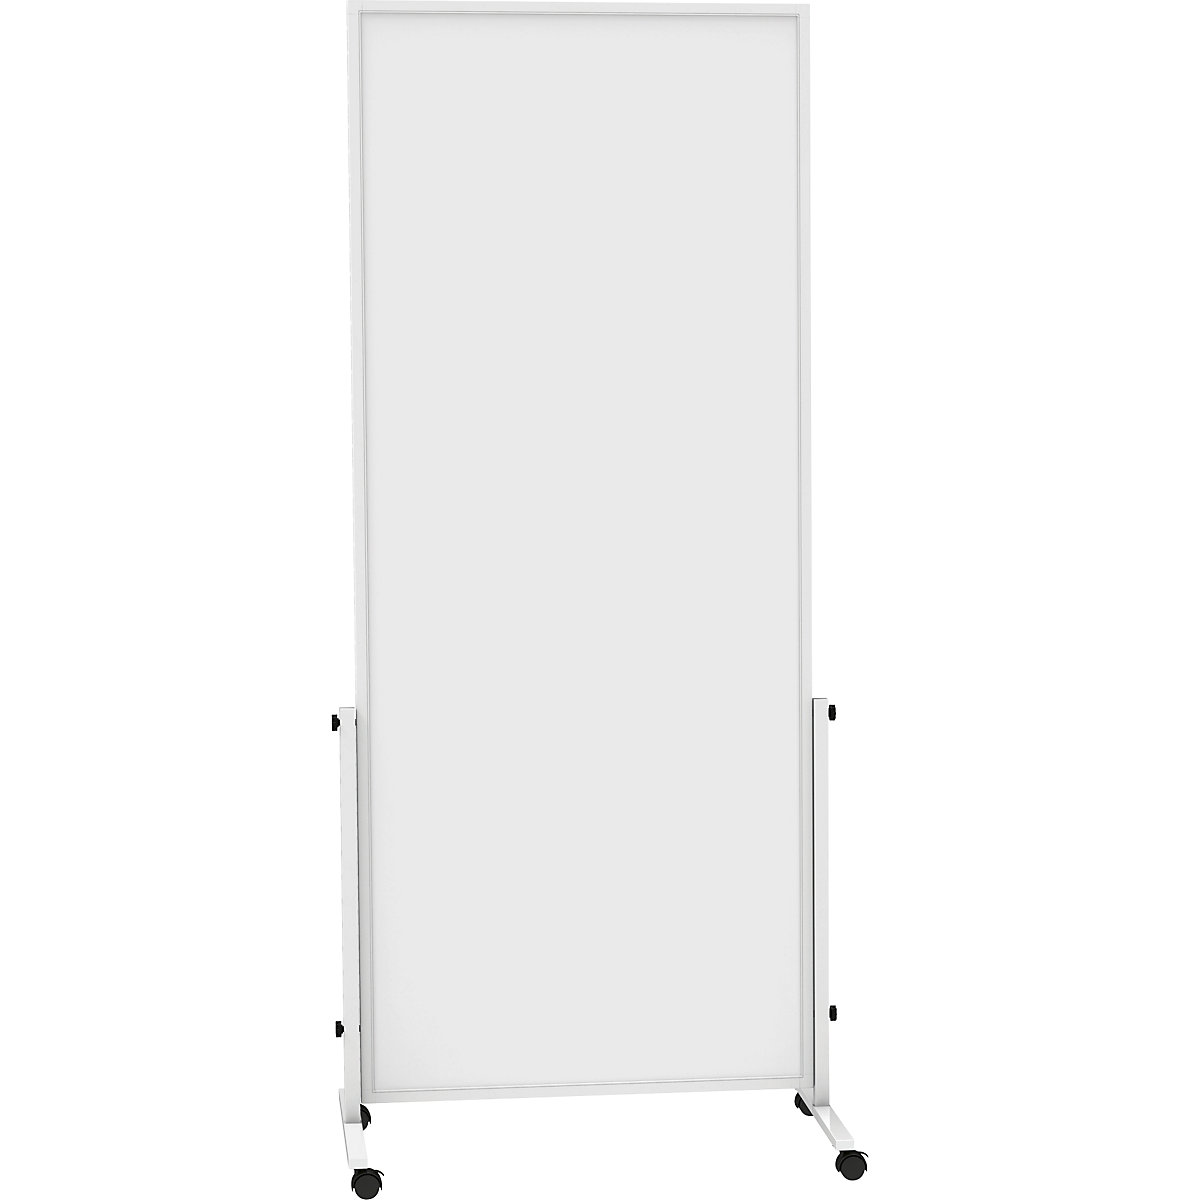 MAUL®solid easy2move mobile whiteboard - MAUL